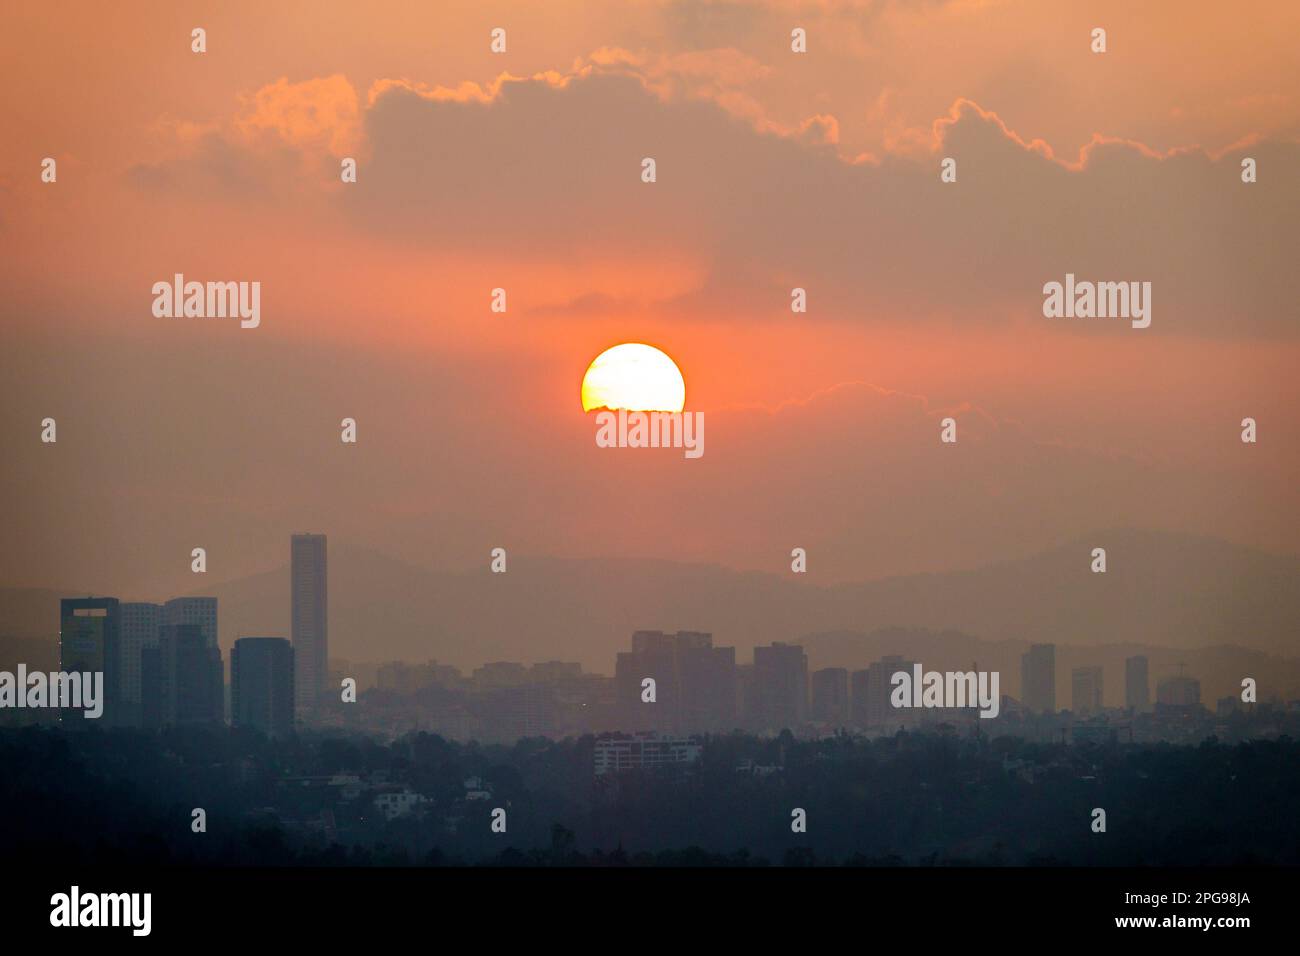 Mexico City,Lomas de Chapultepec,setting sun sunset clouds haze hazy smog,climate change weather temperature inversion,high rise rises skyscraper skys Stock Photo